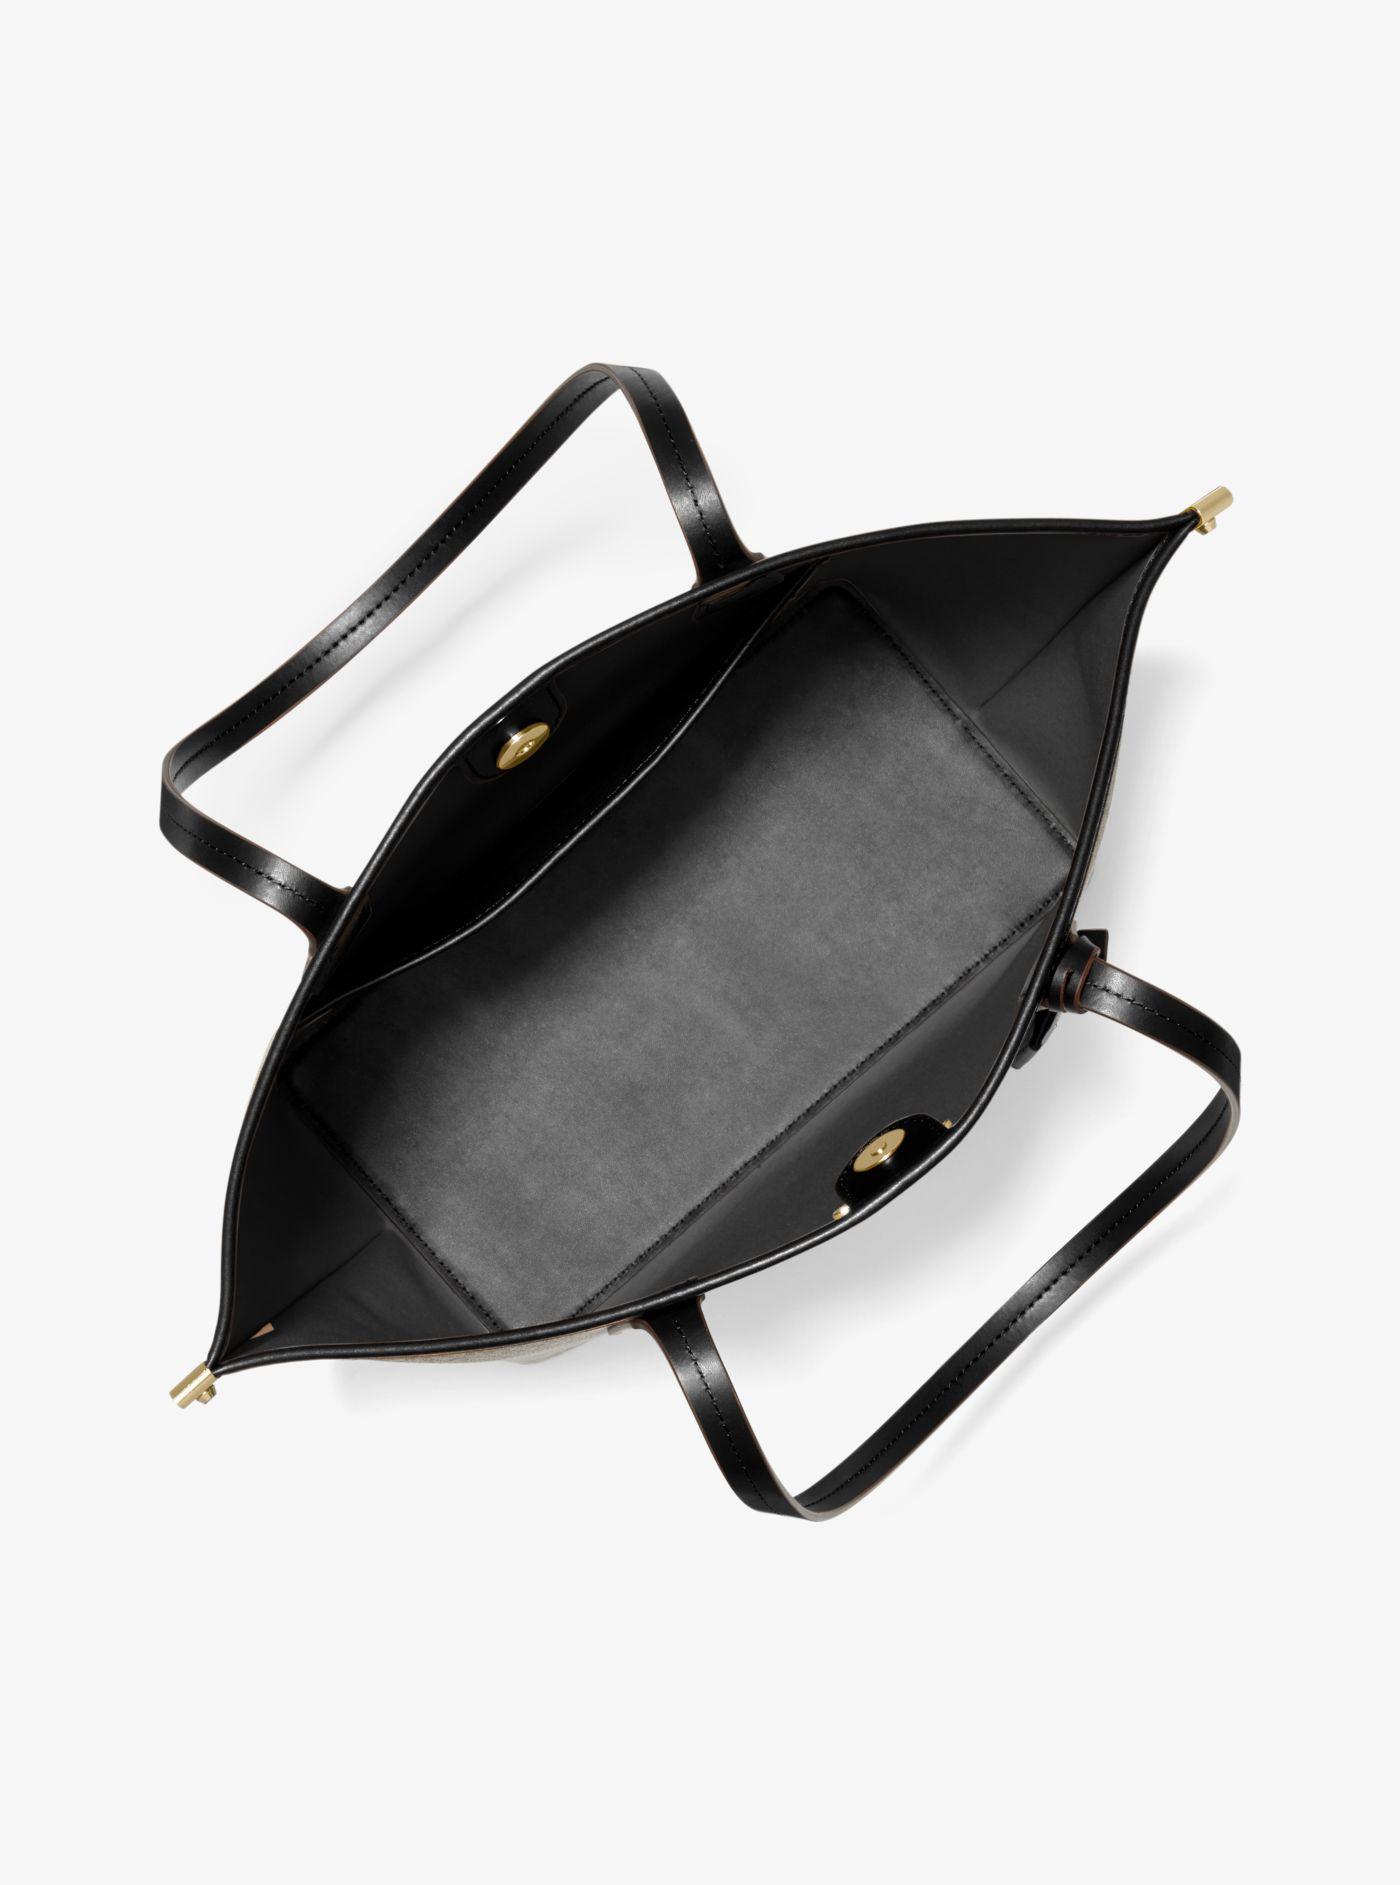 Michael Kors Jane Large Pebbled Leather Tote Bag in Black | Lyst